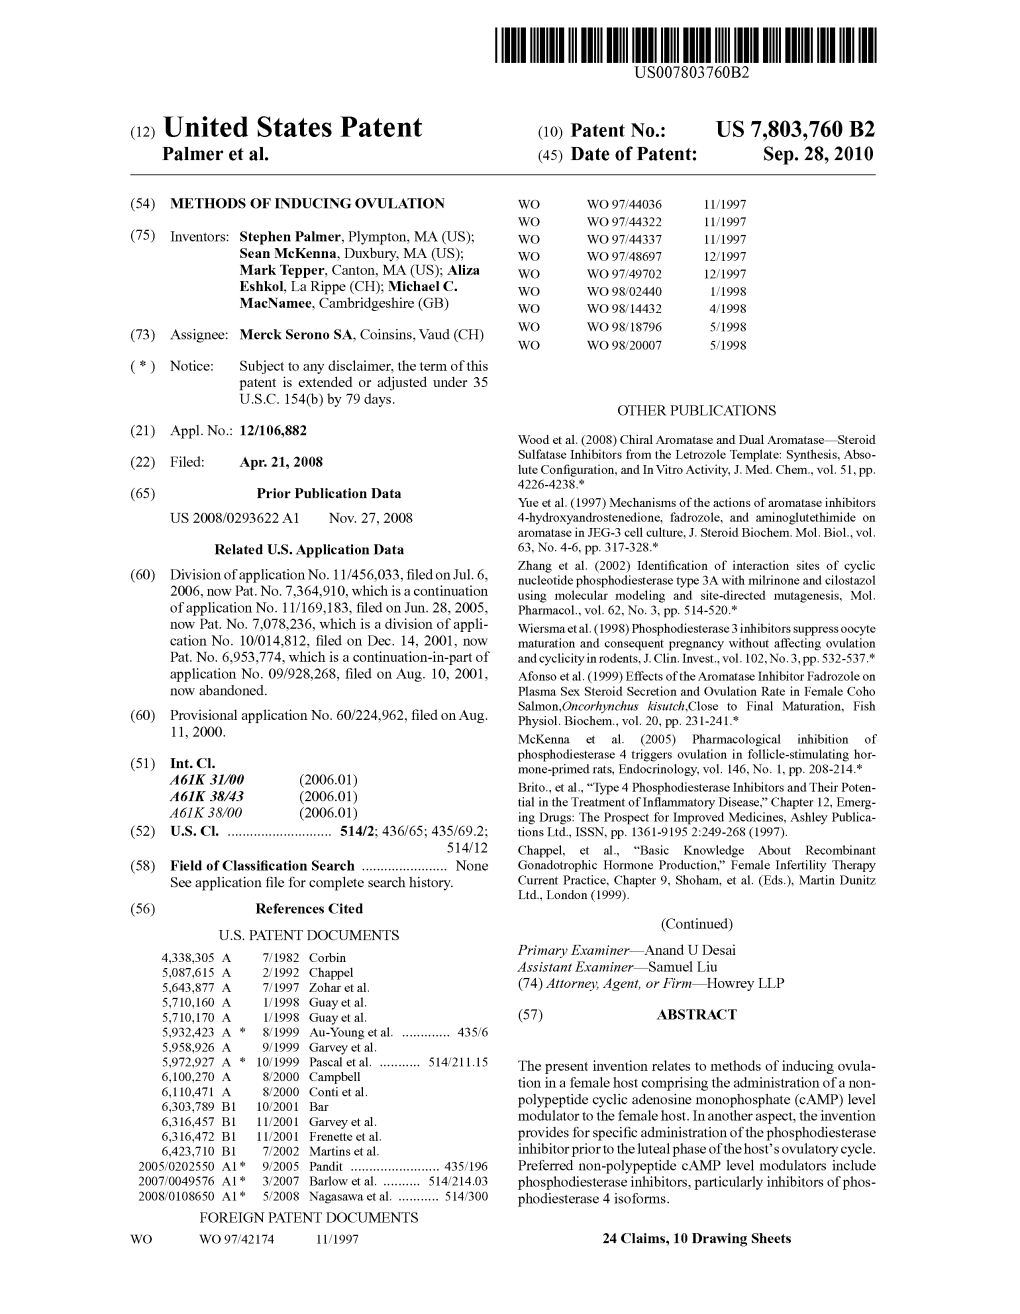 (12) United States Patent (10) Patent No.: US 7.803,760 B2 Palmer Et Al